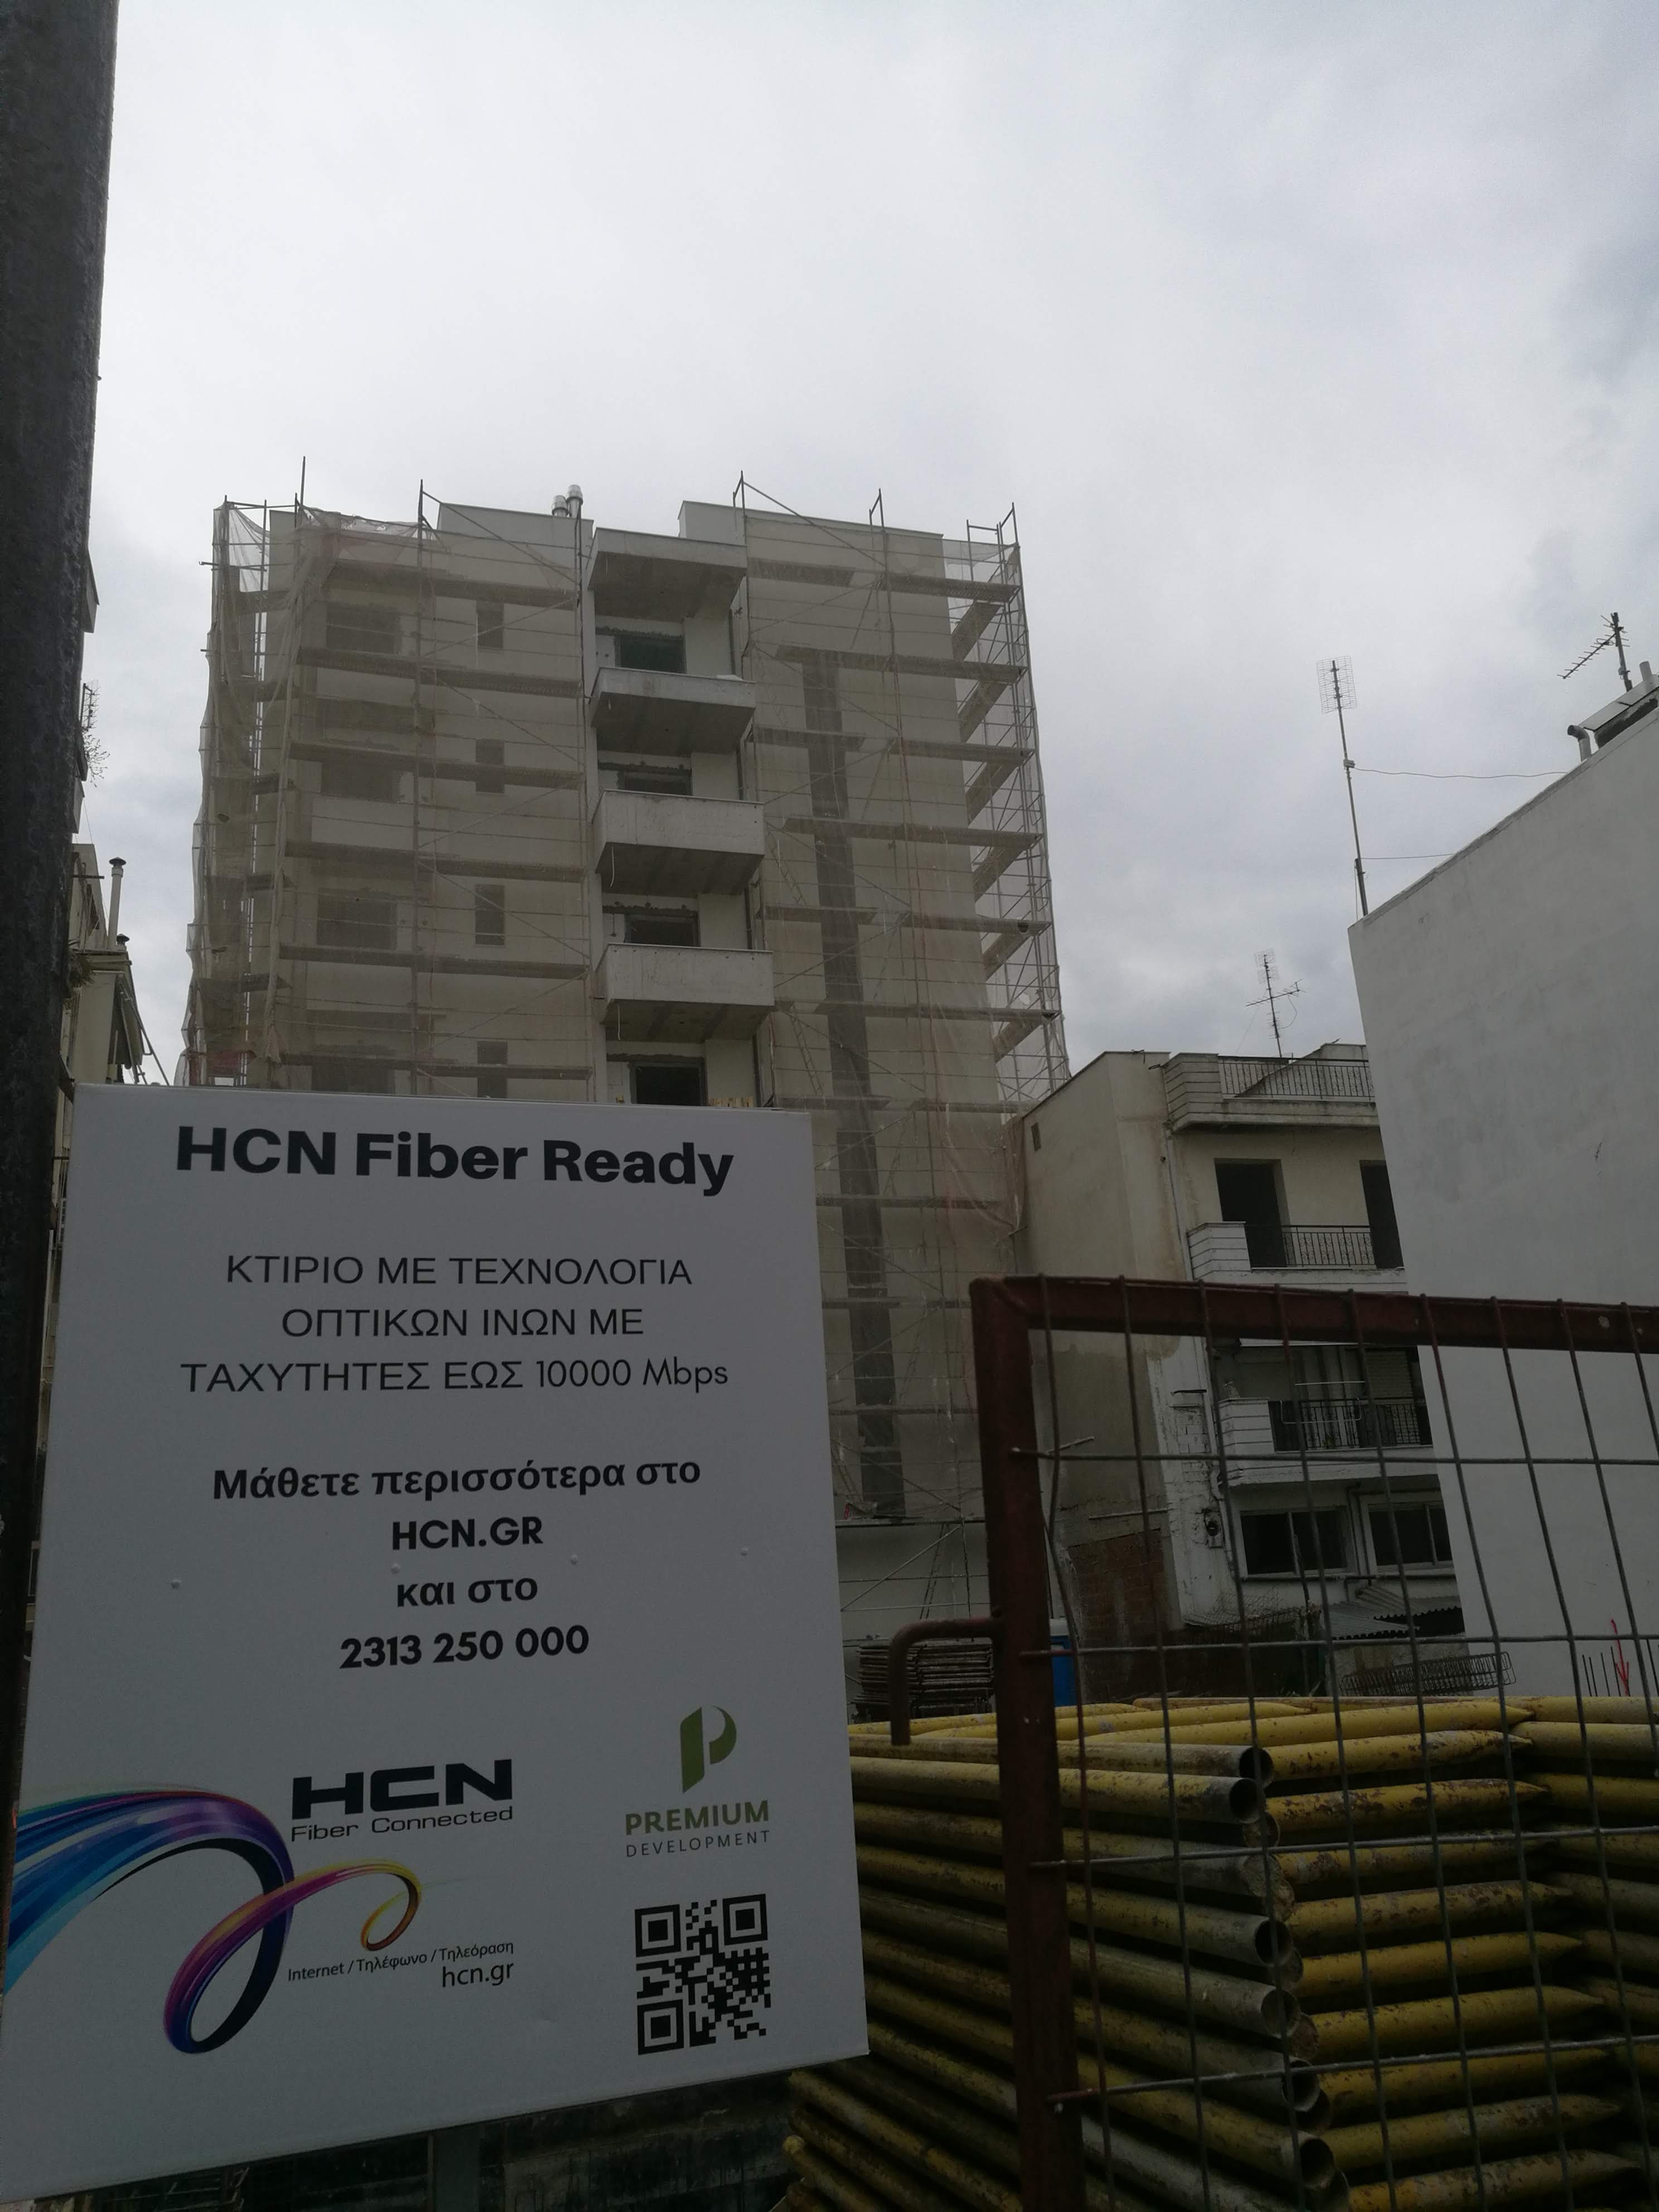 HCN FIBER READY BUILDINGS